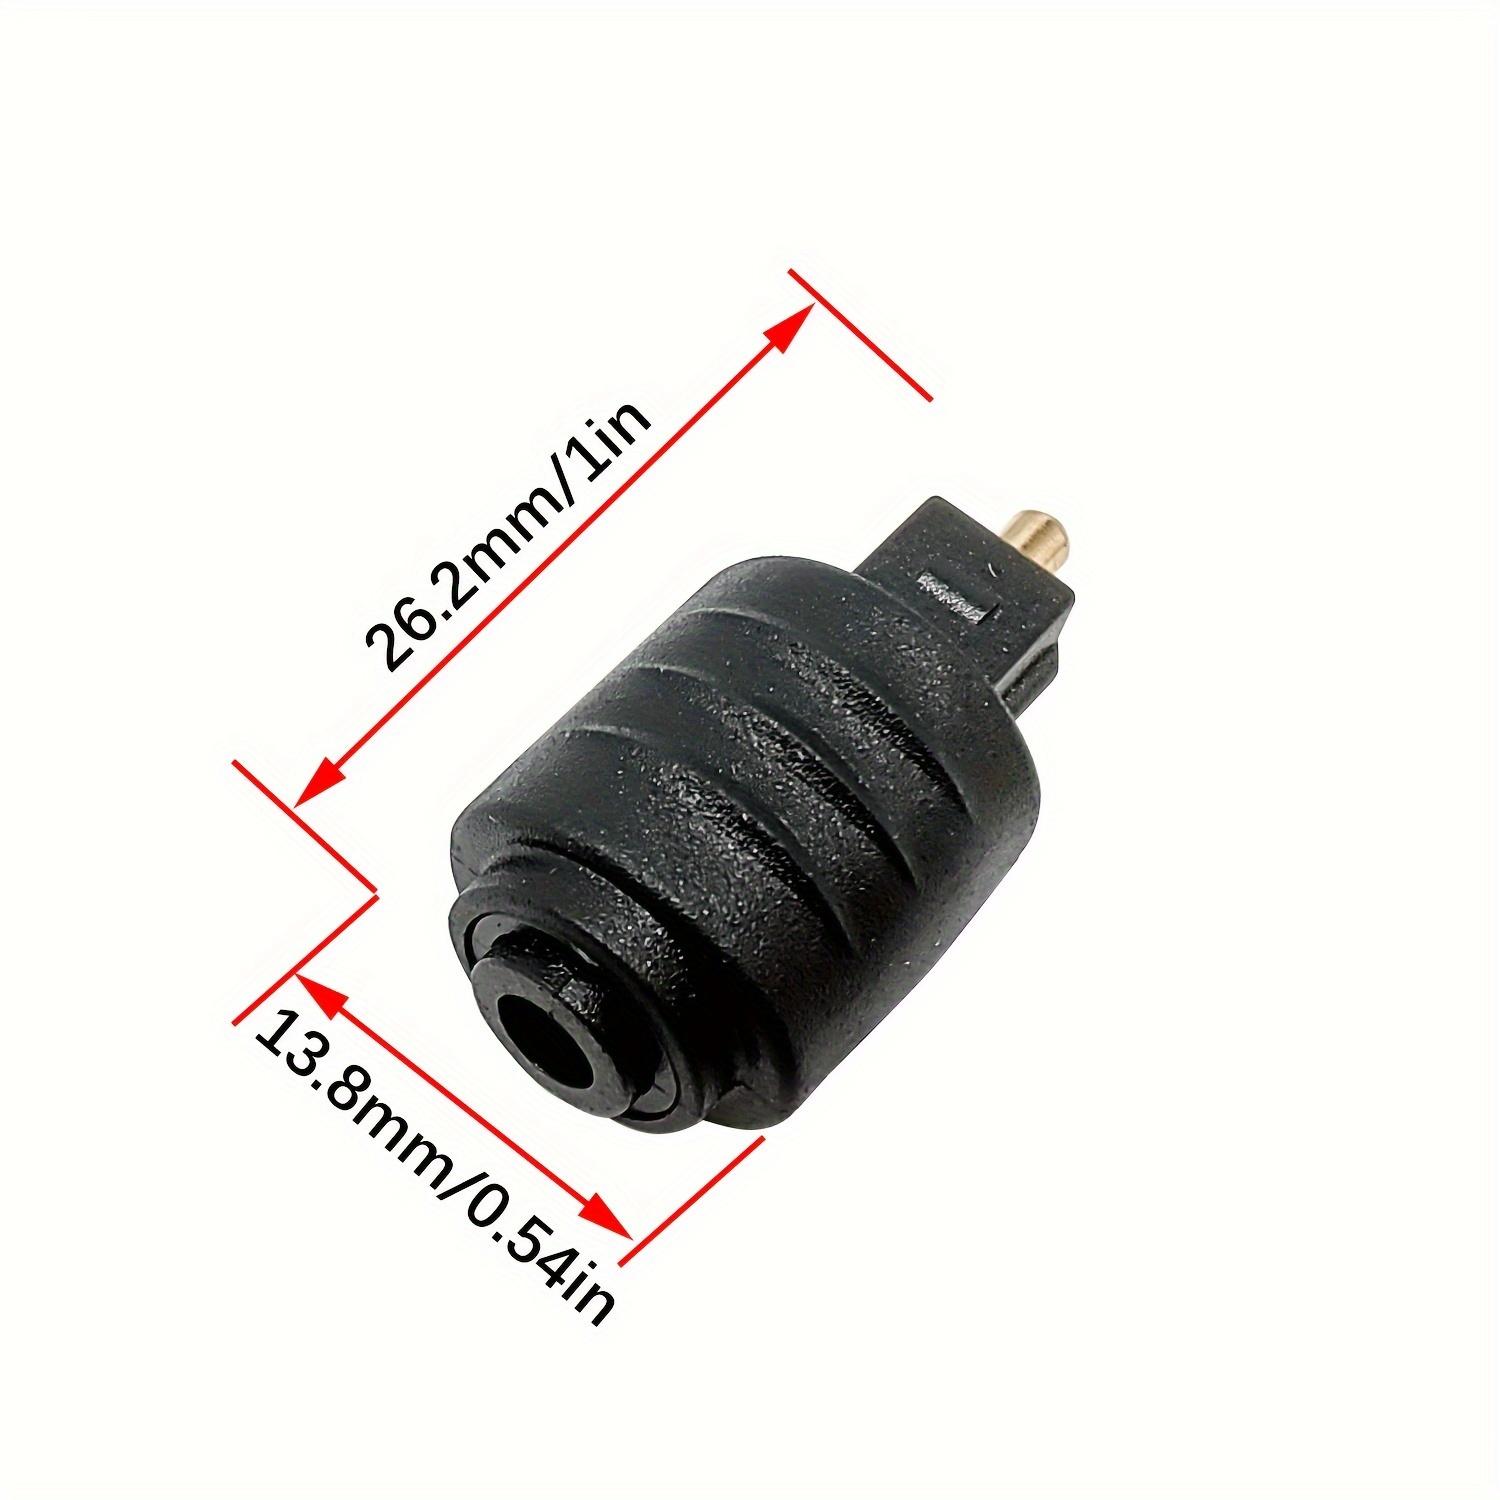 New Optical Audio Adapter 3.5mm Female Jack Plug To Digital Toslink Male